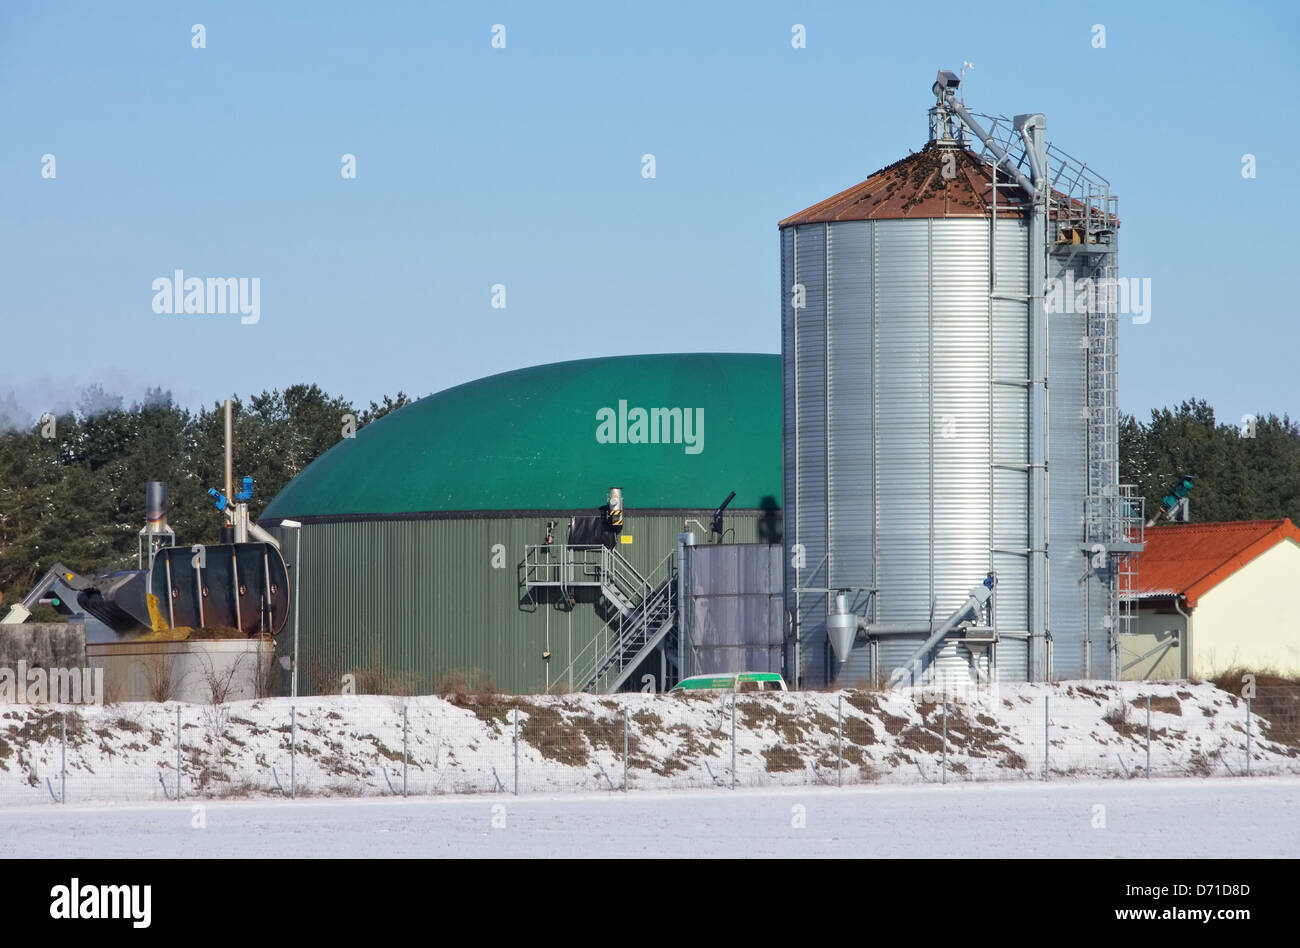 Biogasanlage - biogas plant 87 Stock Photo